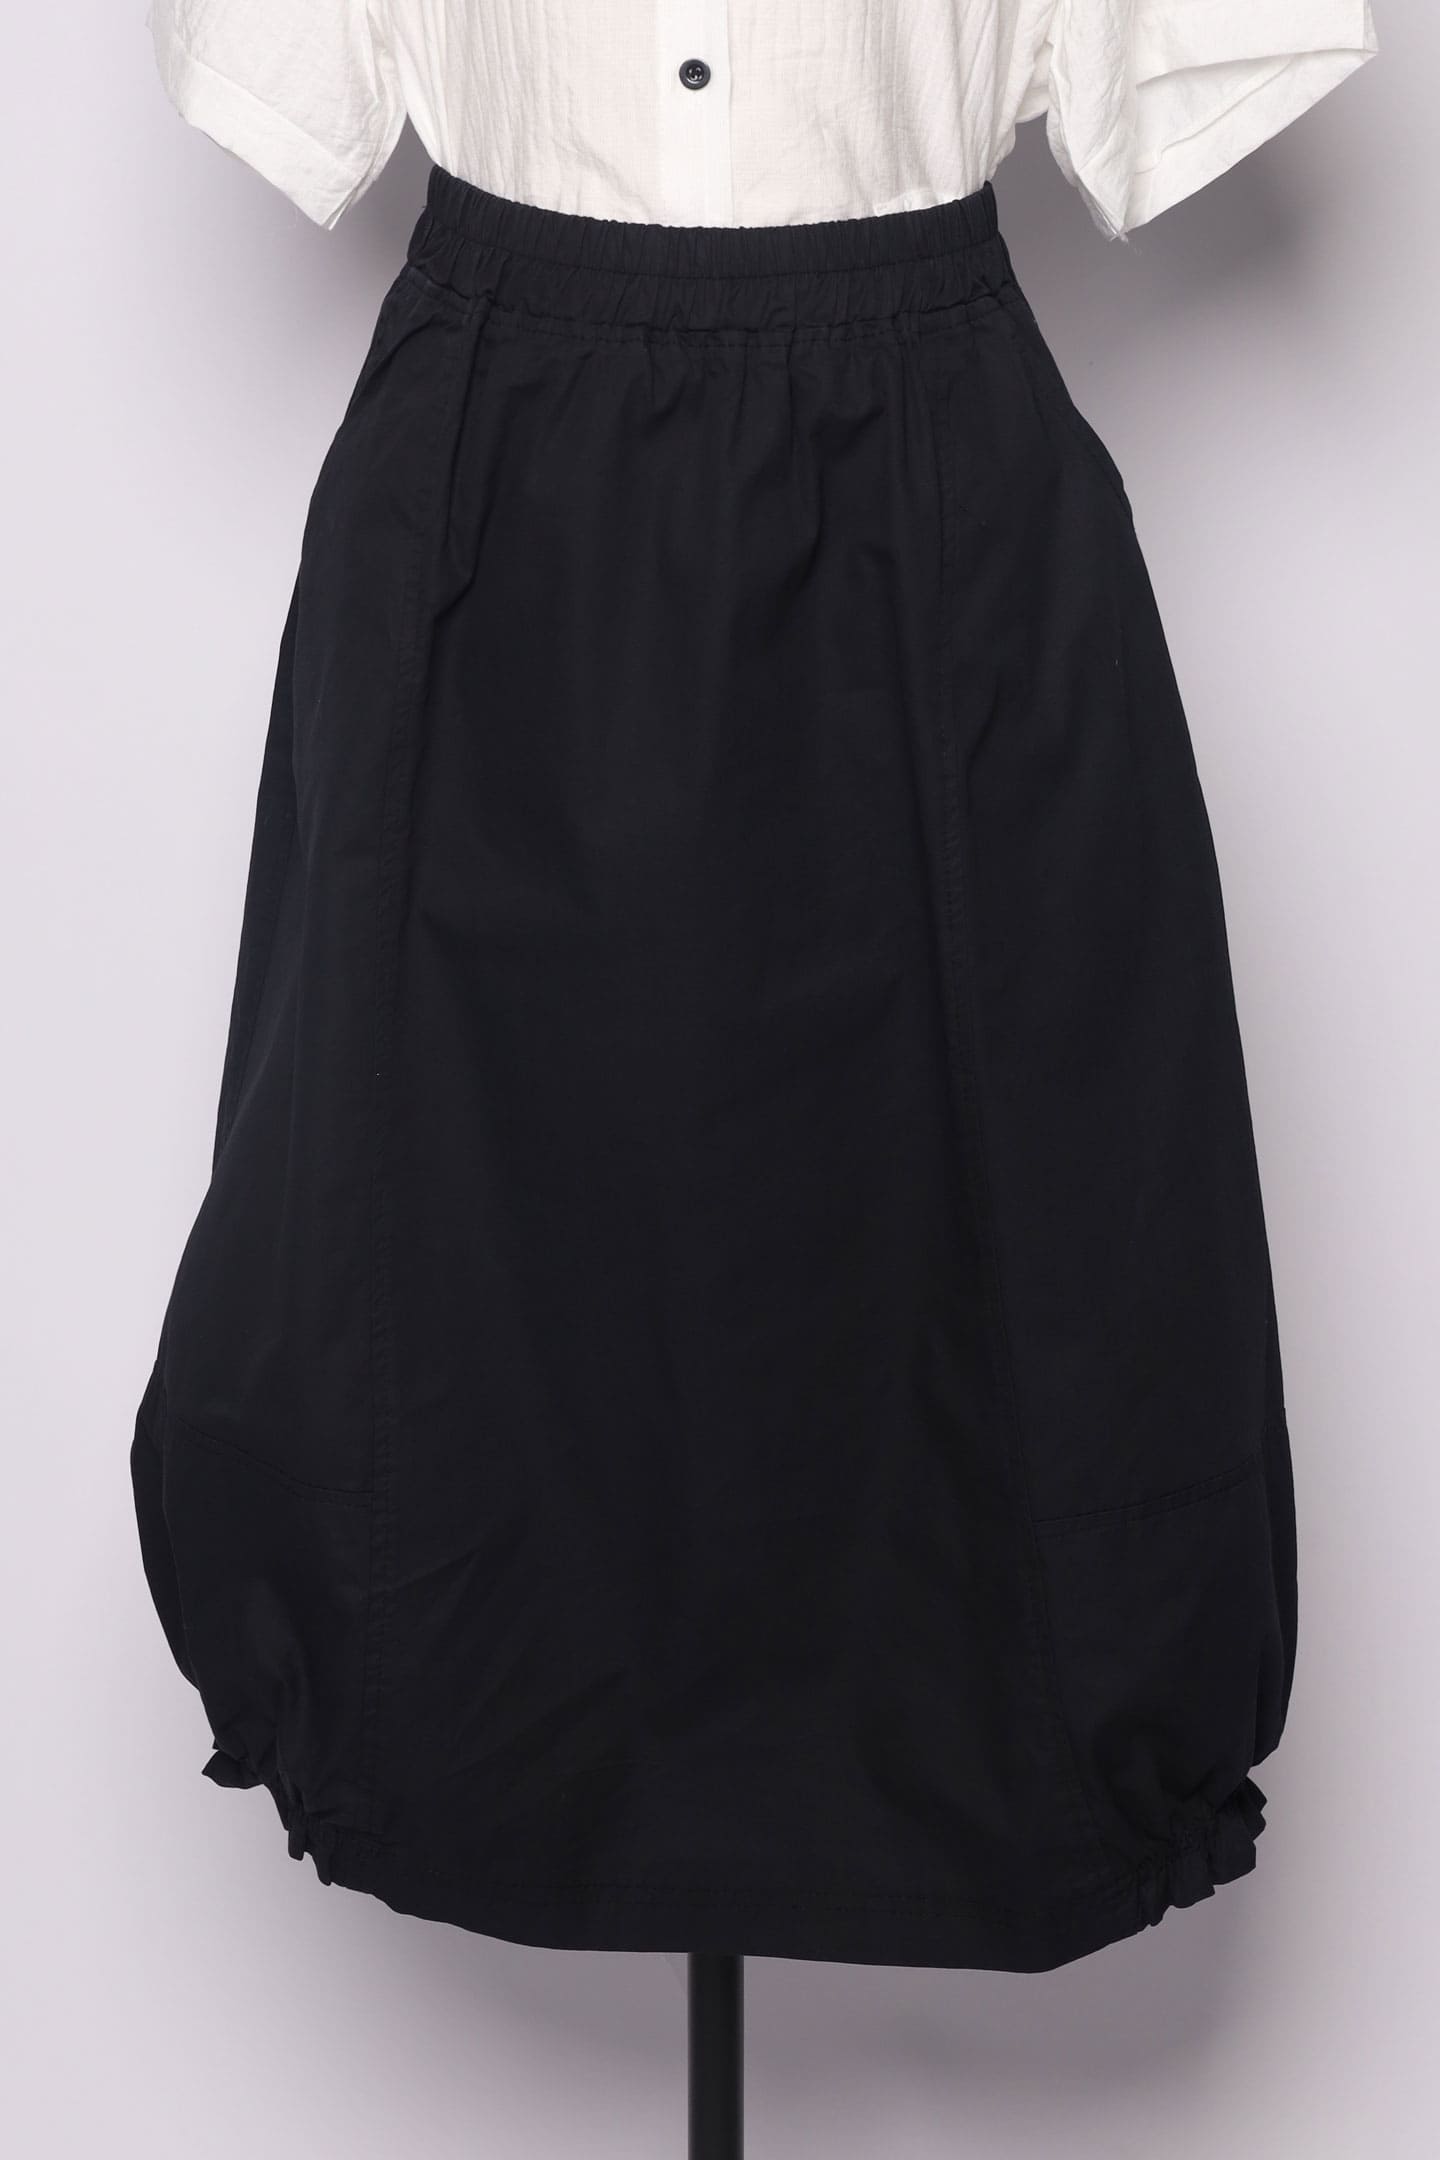 PO - Quinto Skirt in Black